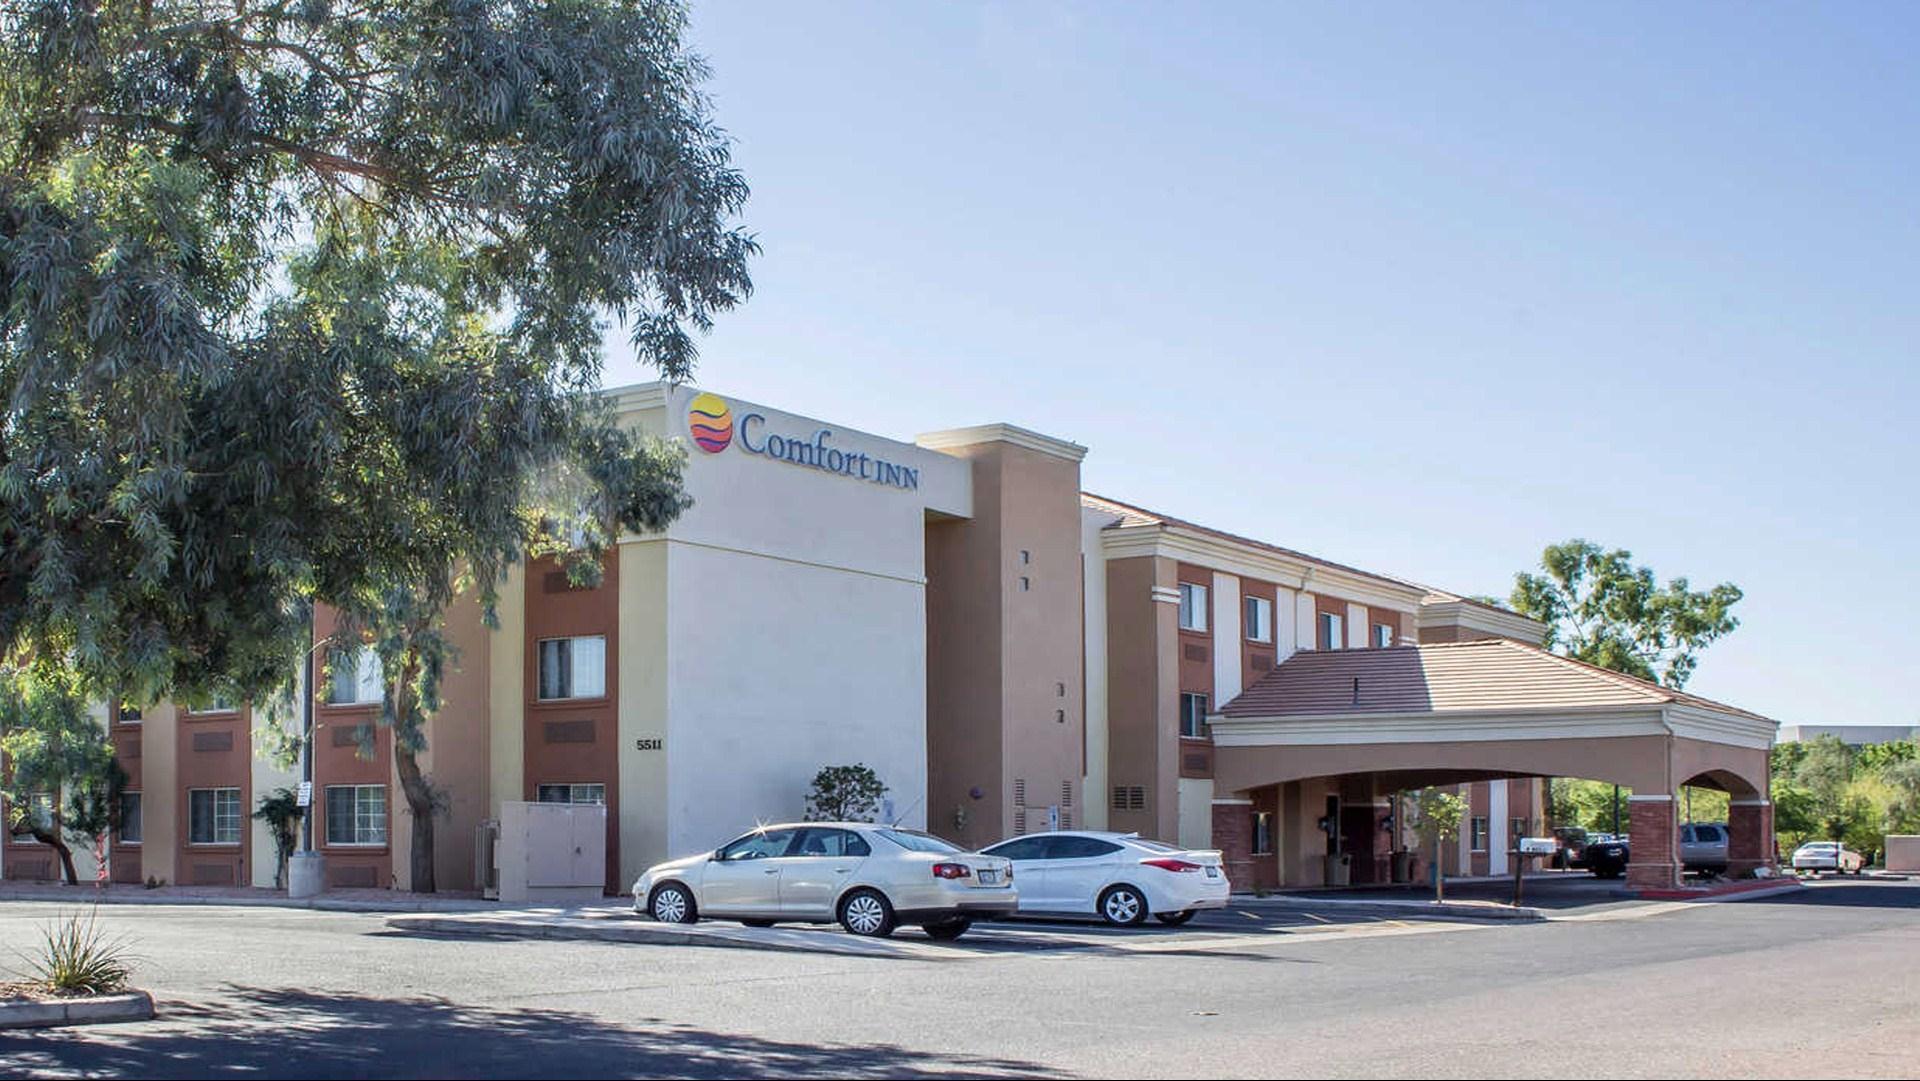 Comfort Inn and Suites North Glendale - Bell Road in Glendale, AZ